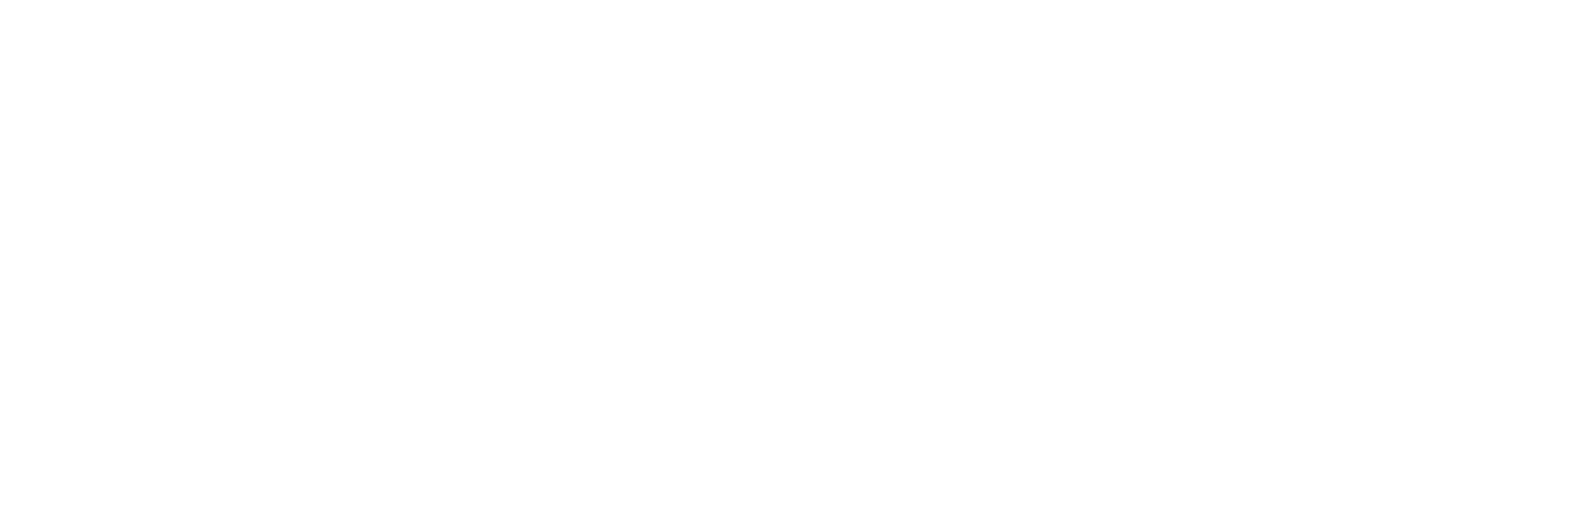 Jubilee Metals Group logo grand pour les fonds sombres (PNG transparent)